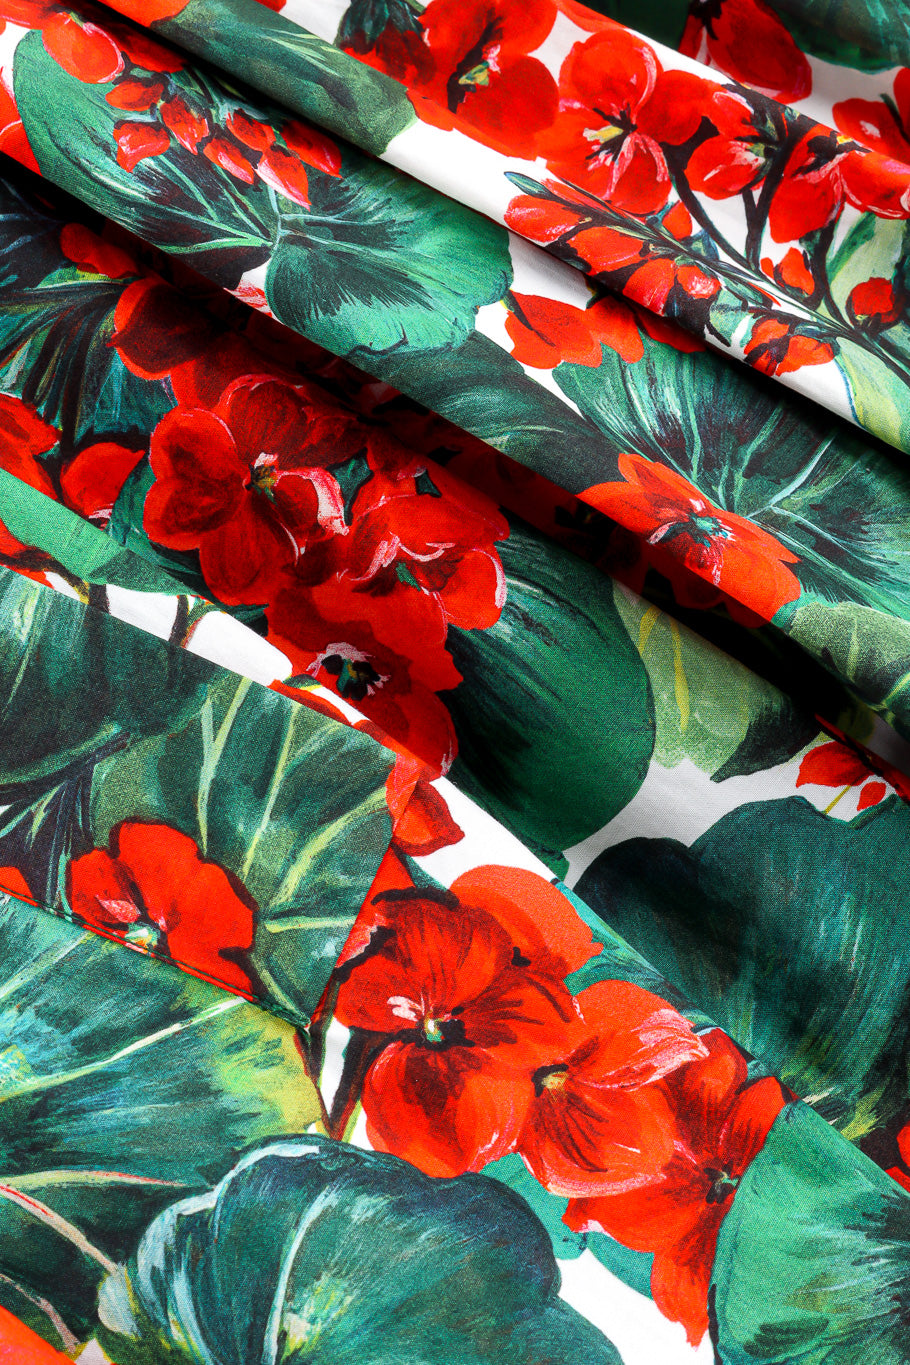 Dolce and Gabbana Floral Leaf Cotton Dress fabric detail @recessla